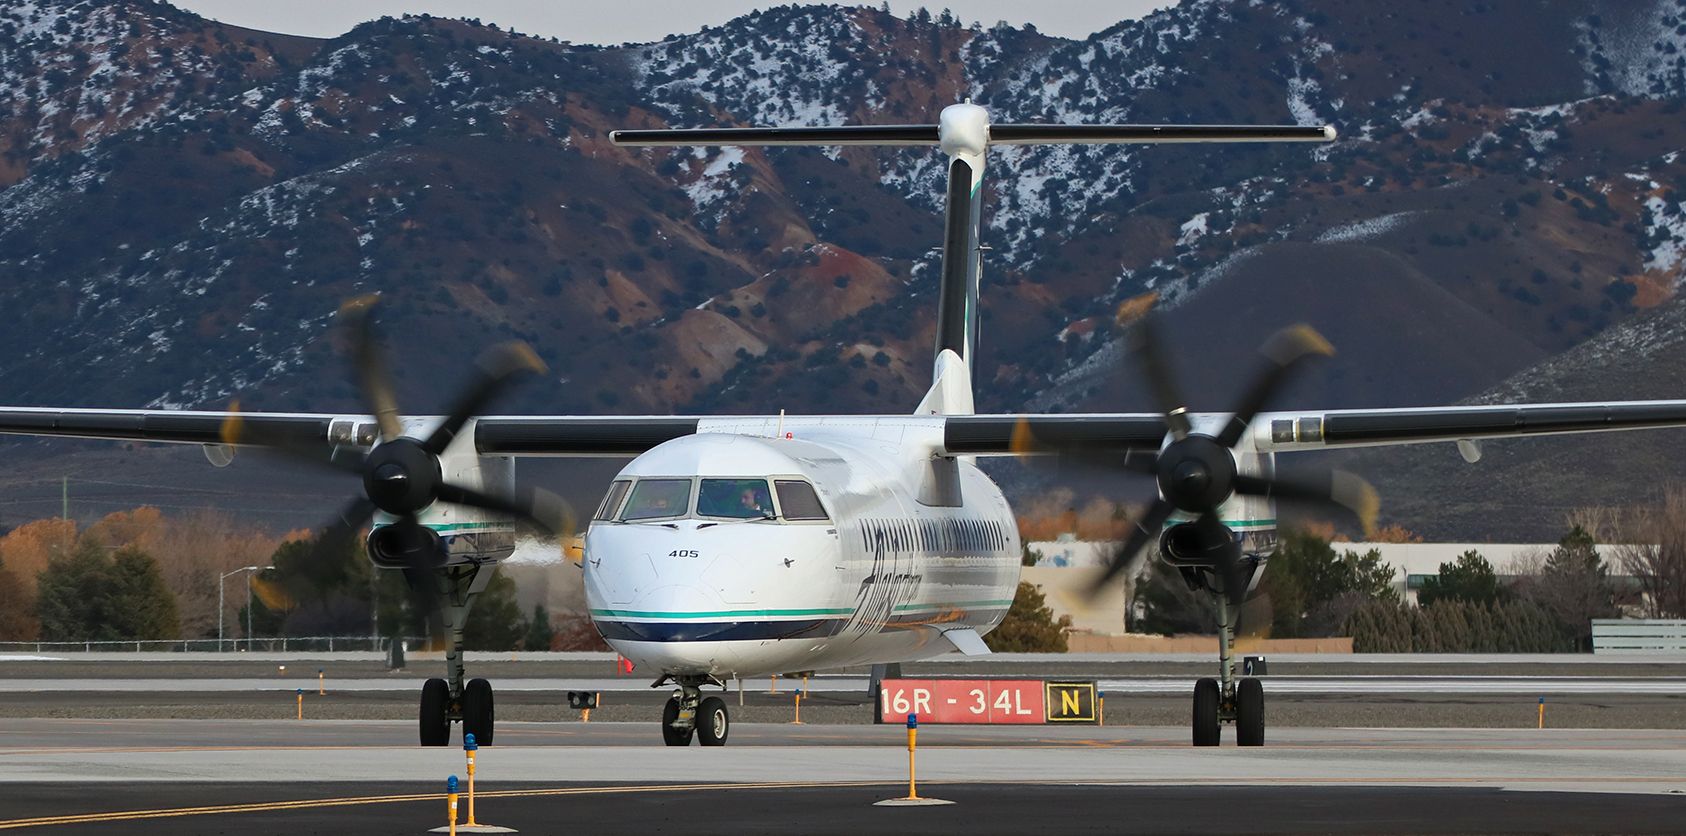 de Havilland Dash 8-400 (N405QX) - A Horizon (Alaska Airlines) Dash 8 turns north to begin taxiing back to the terminal at Reno Tahoe International after landing on 16R.